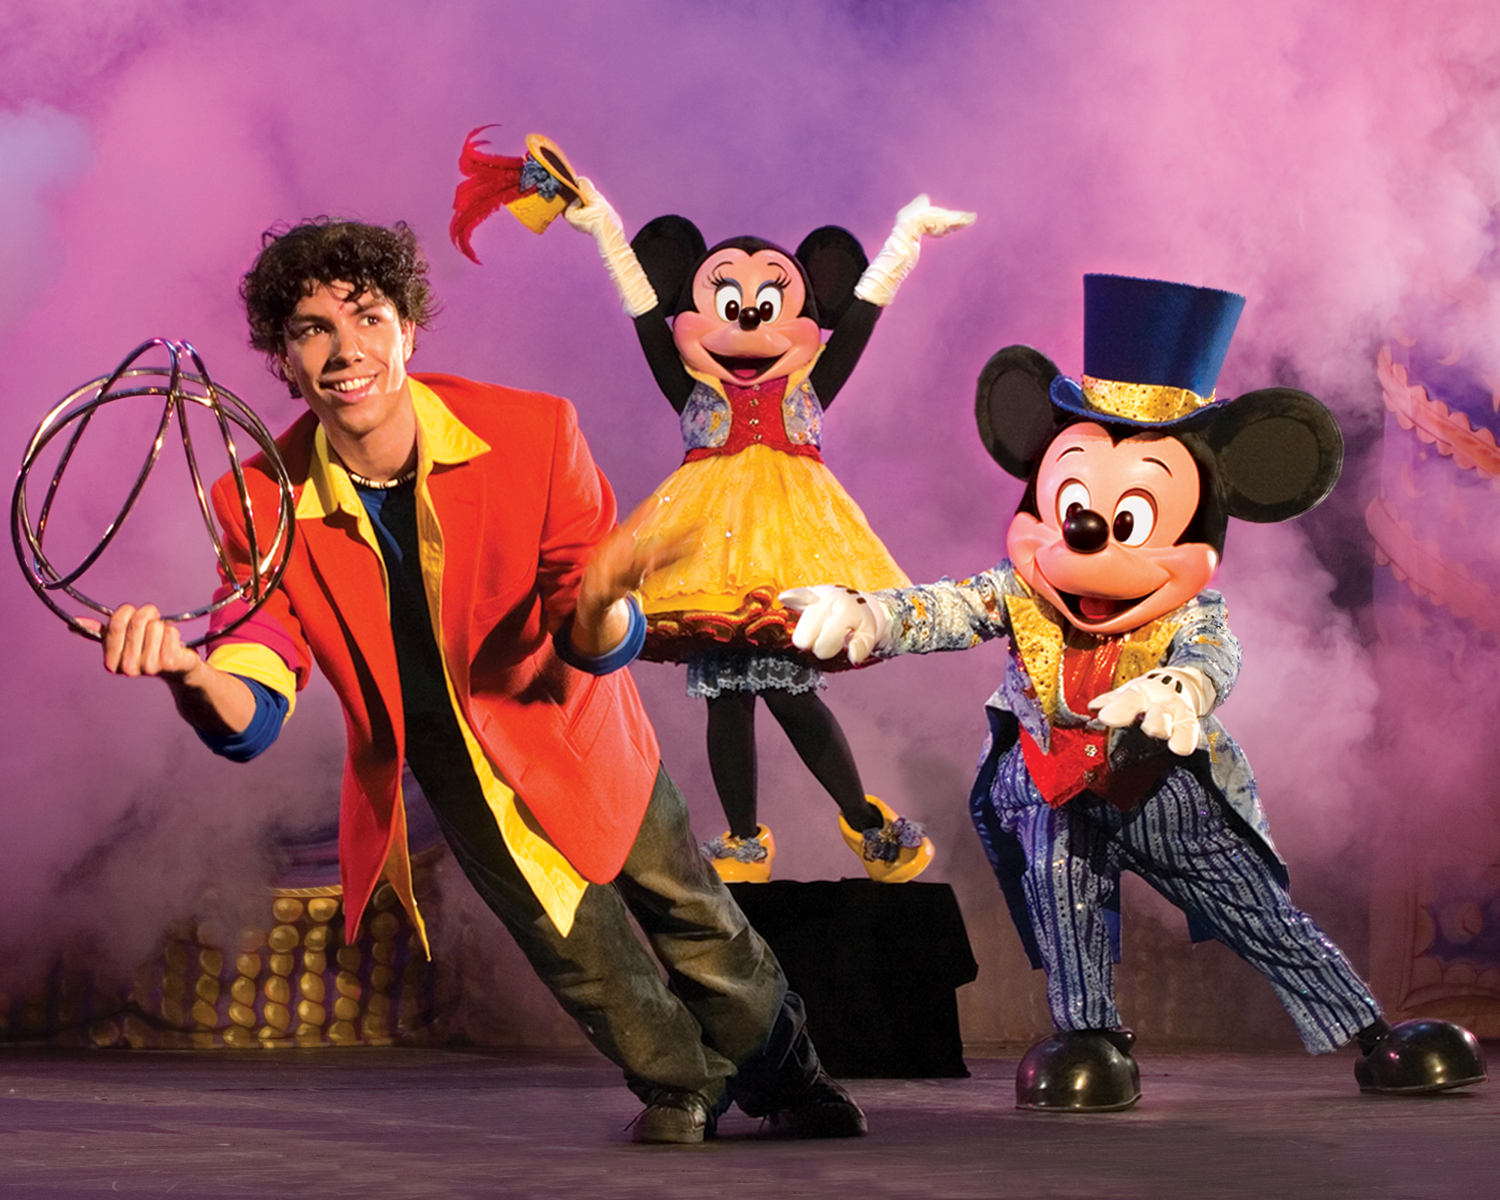 Mickey’s Magic Show 